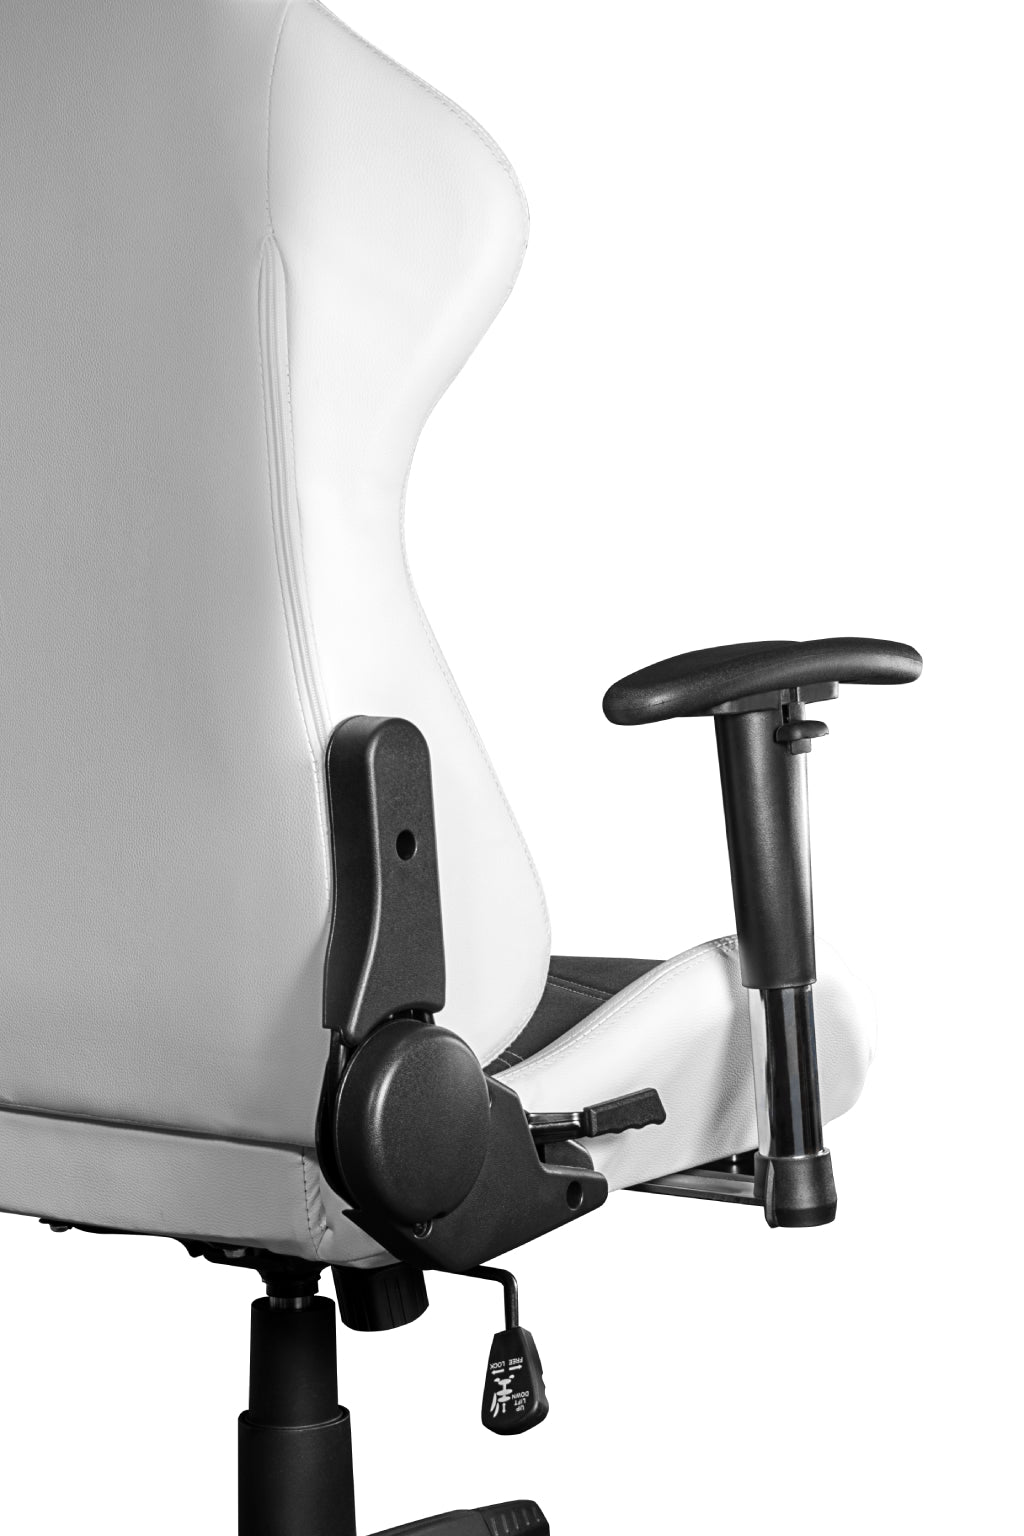 GALAX Gaming Chair (GC-04W) White-Gaming Chair-Galax-computerspace